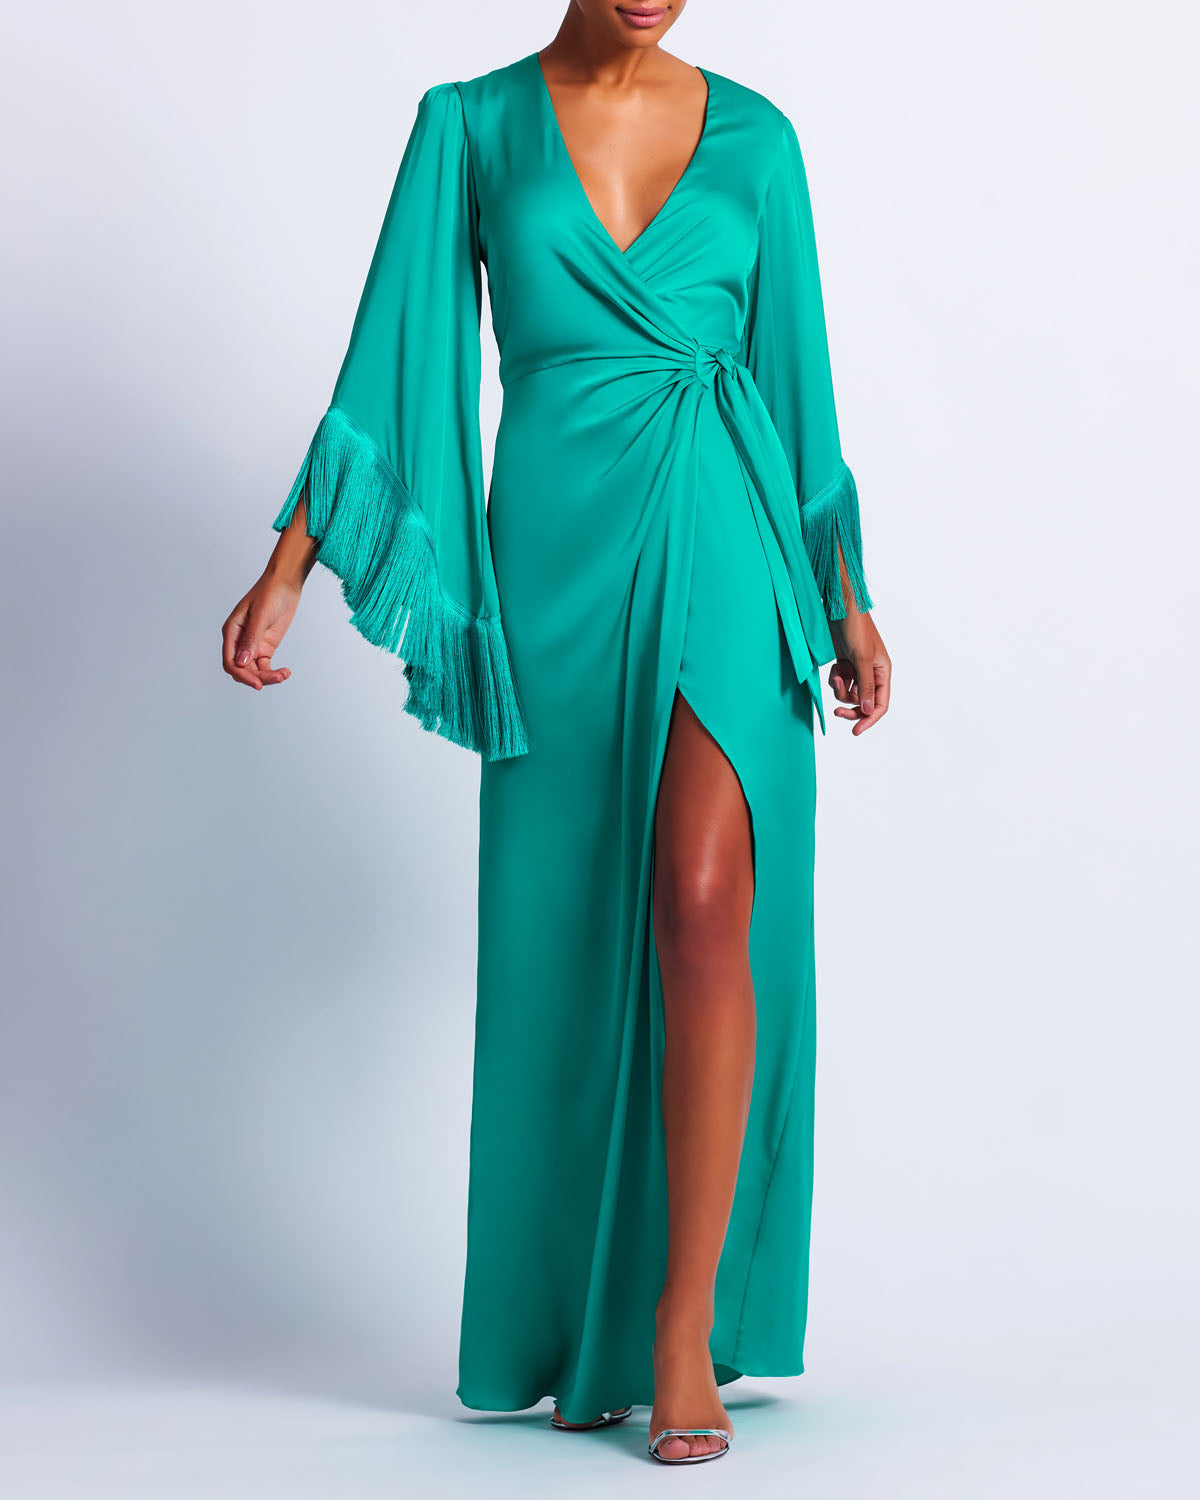 Fringe Trim Wrap Dress - Premium Long dress from Marina St Barth - Just $650! Shop now at Marina St Barth